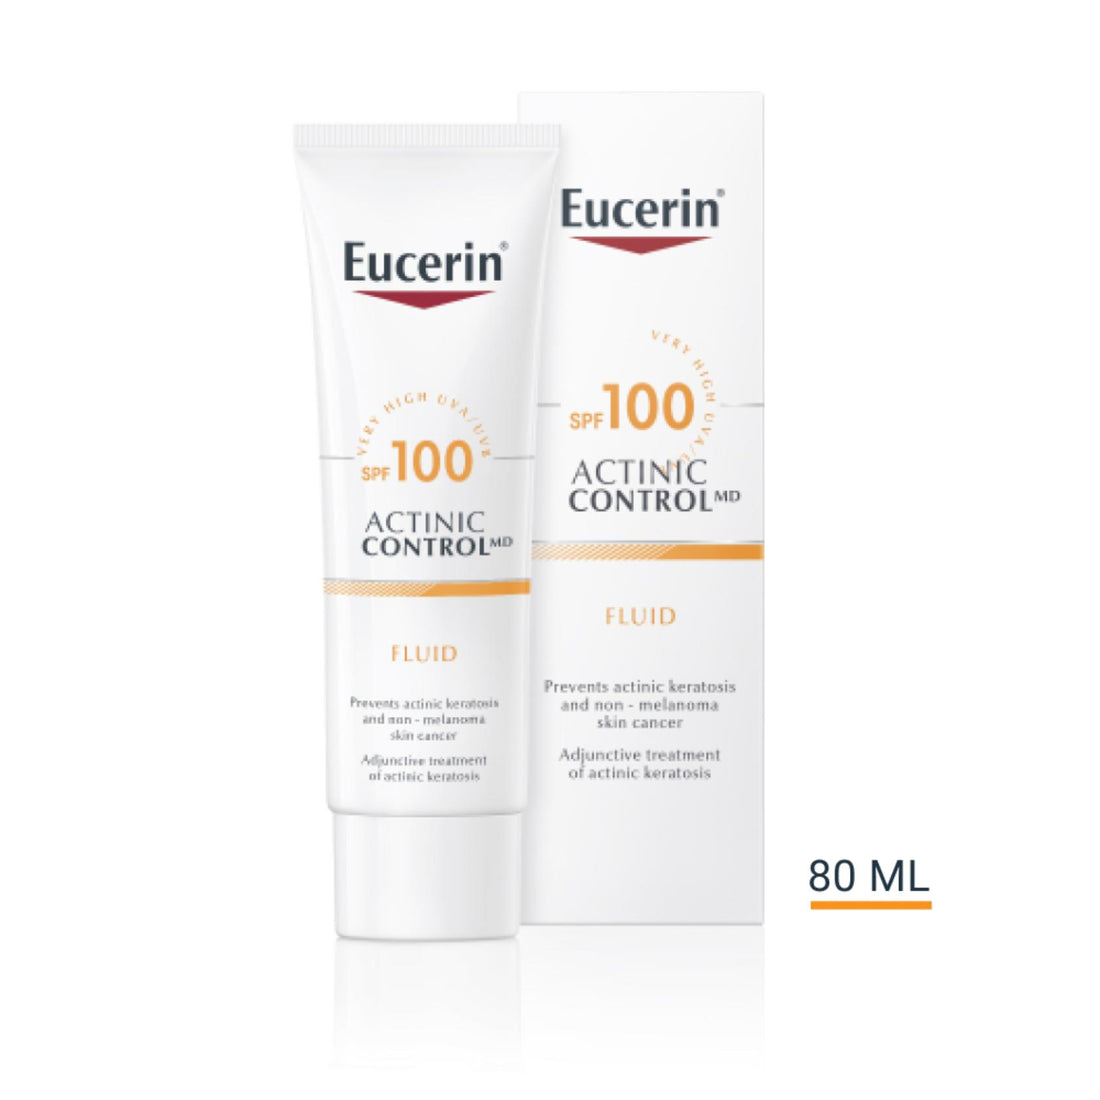 Eucerin Actinic Control MD Fluide SPF100 80 ml